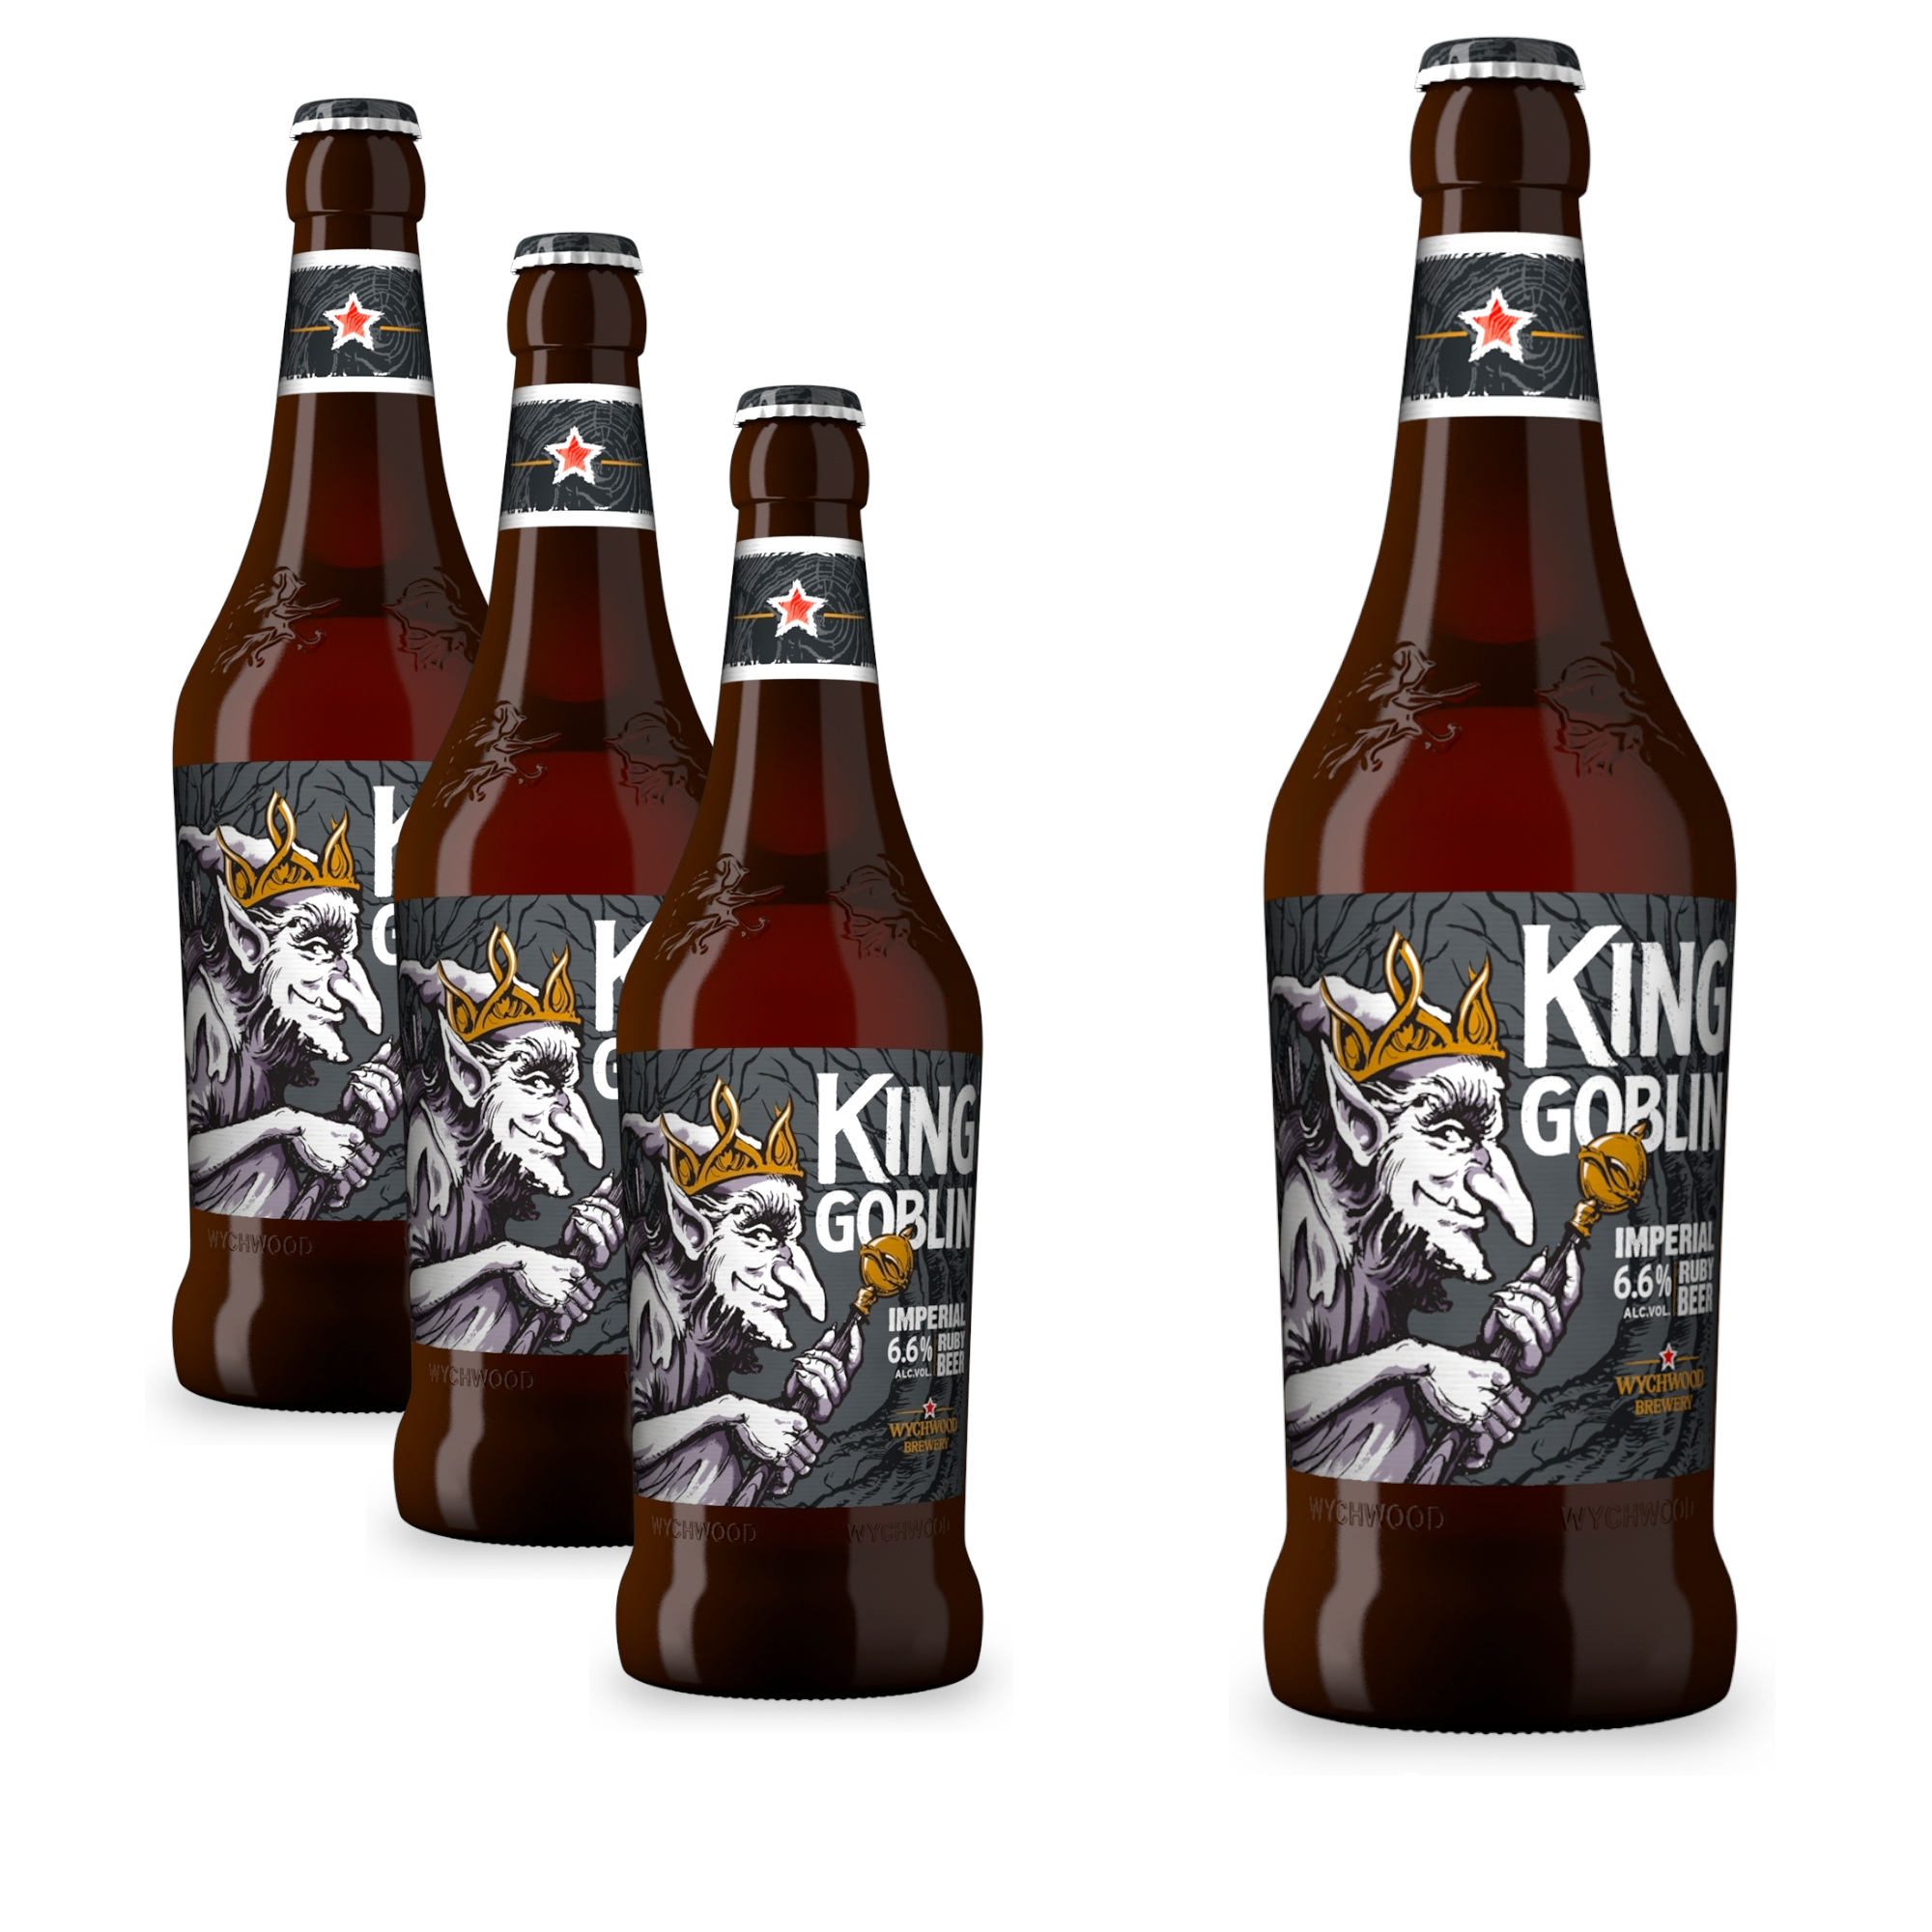 Wychwood King Goblin 0,5l- Imperial Ruby Beer mit 6,60% Vol.- Rotbier aus England